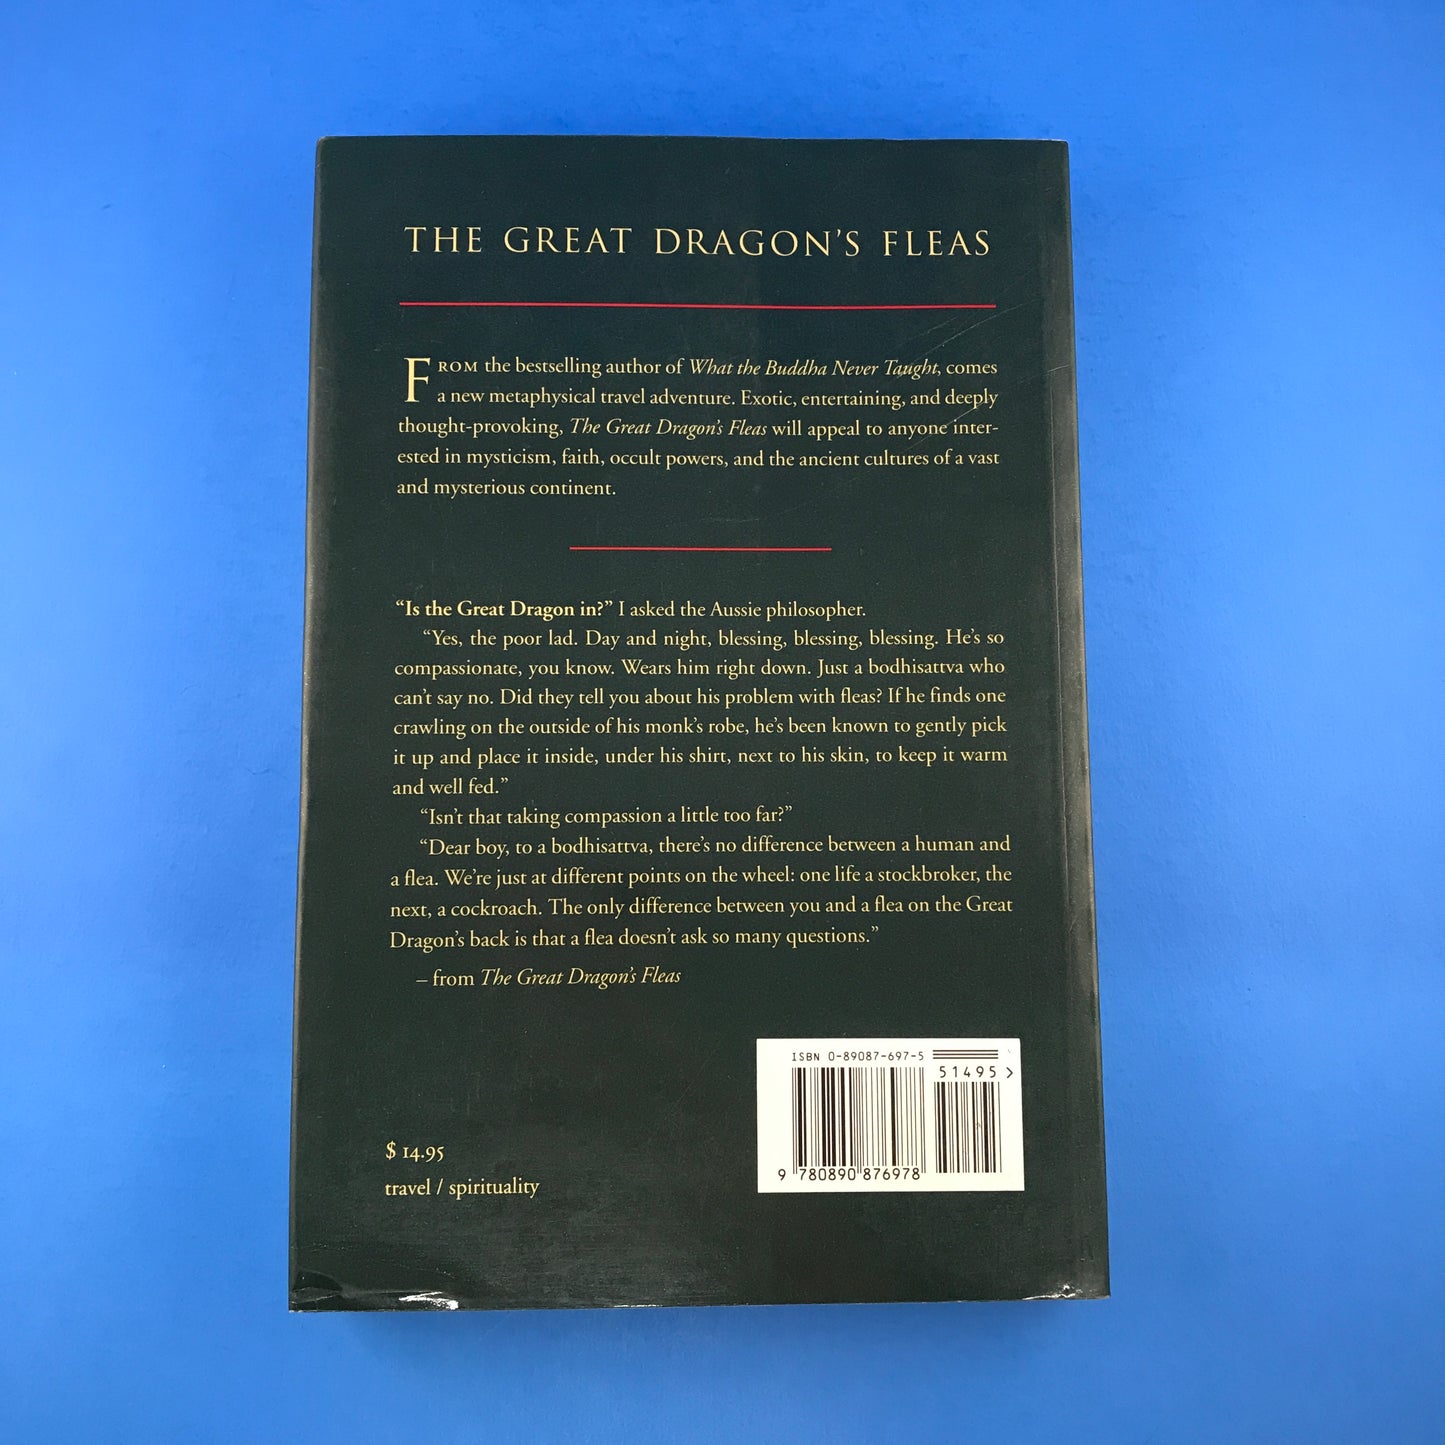 The Great Dragon's Fleas